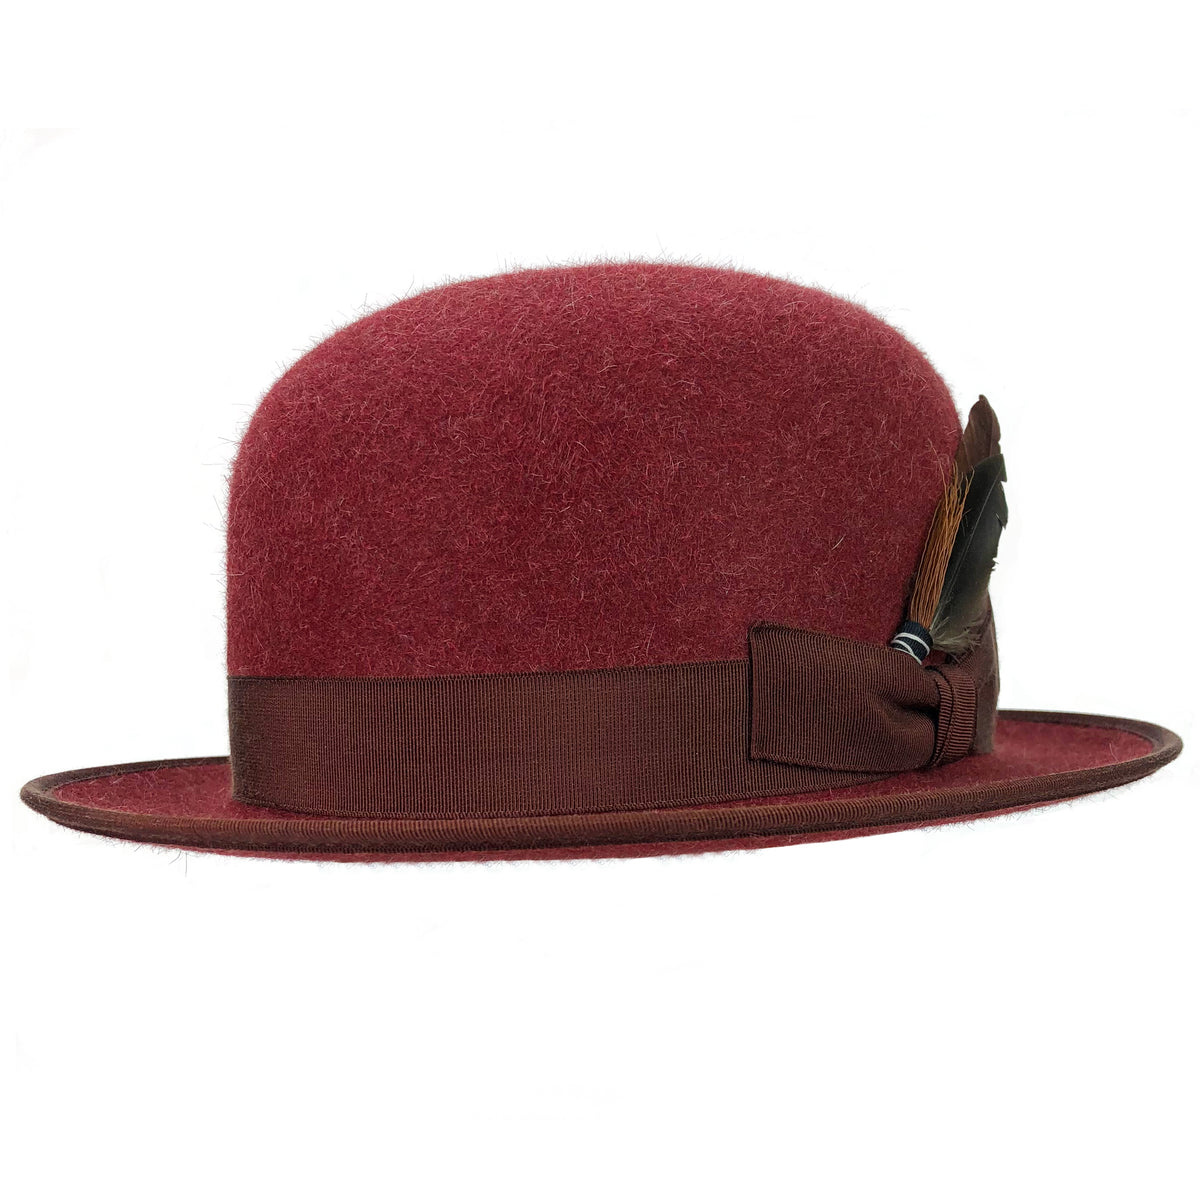 hatWRKS original burgdorf bowler hat